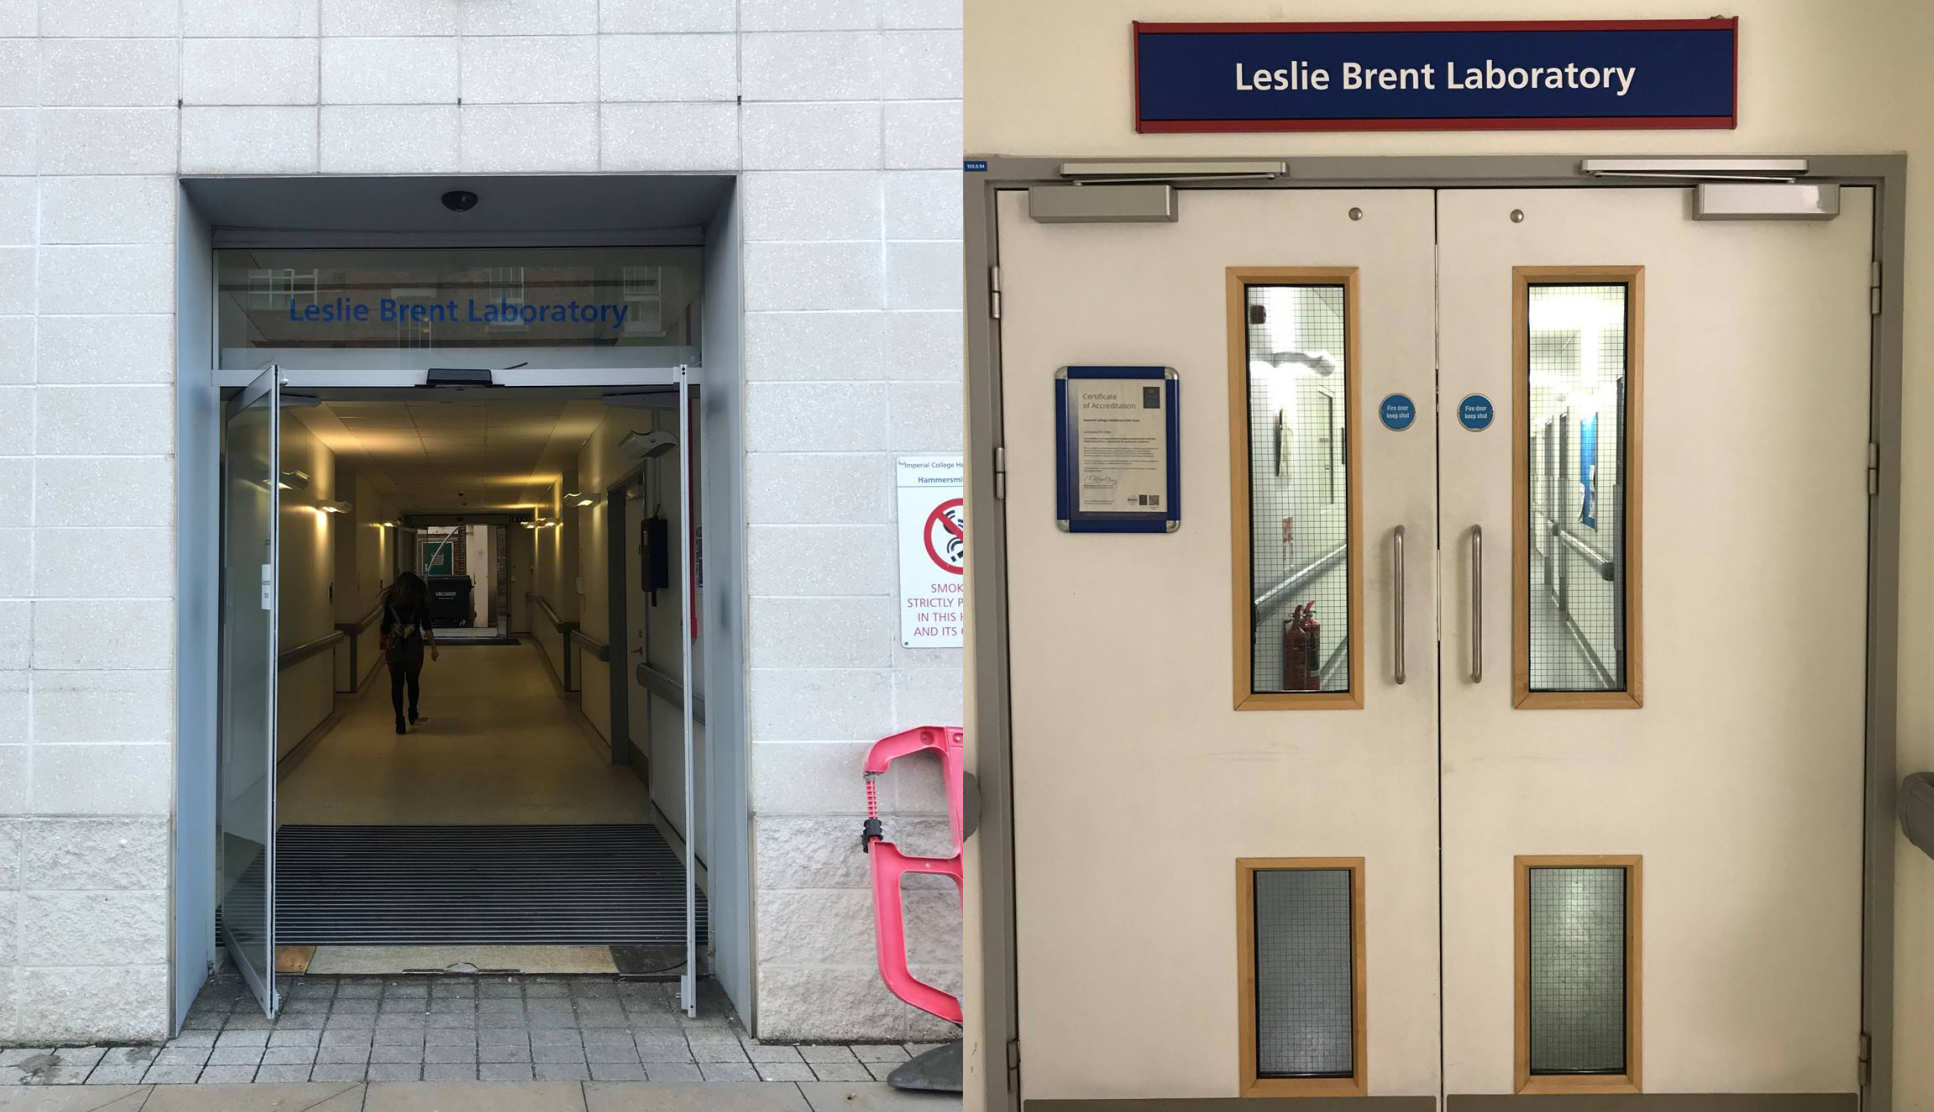 Leslie Brent Laboratory at Hammersmith